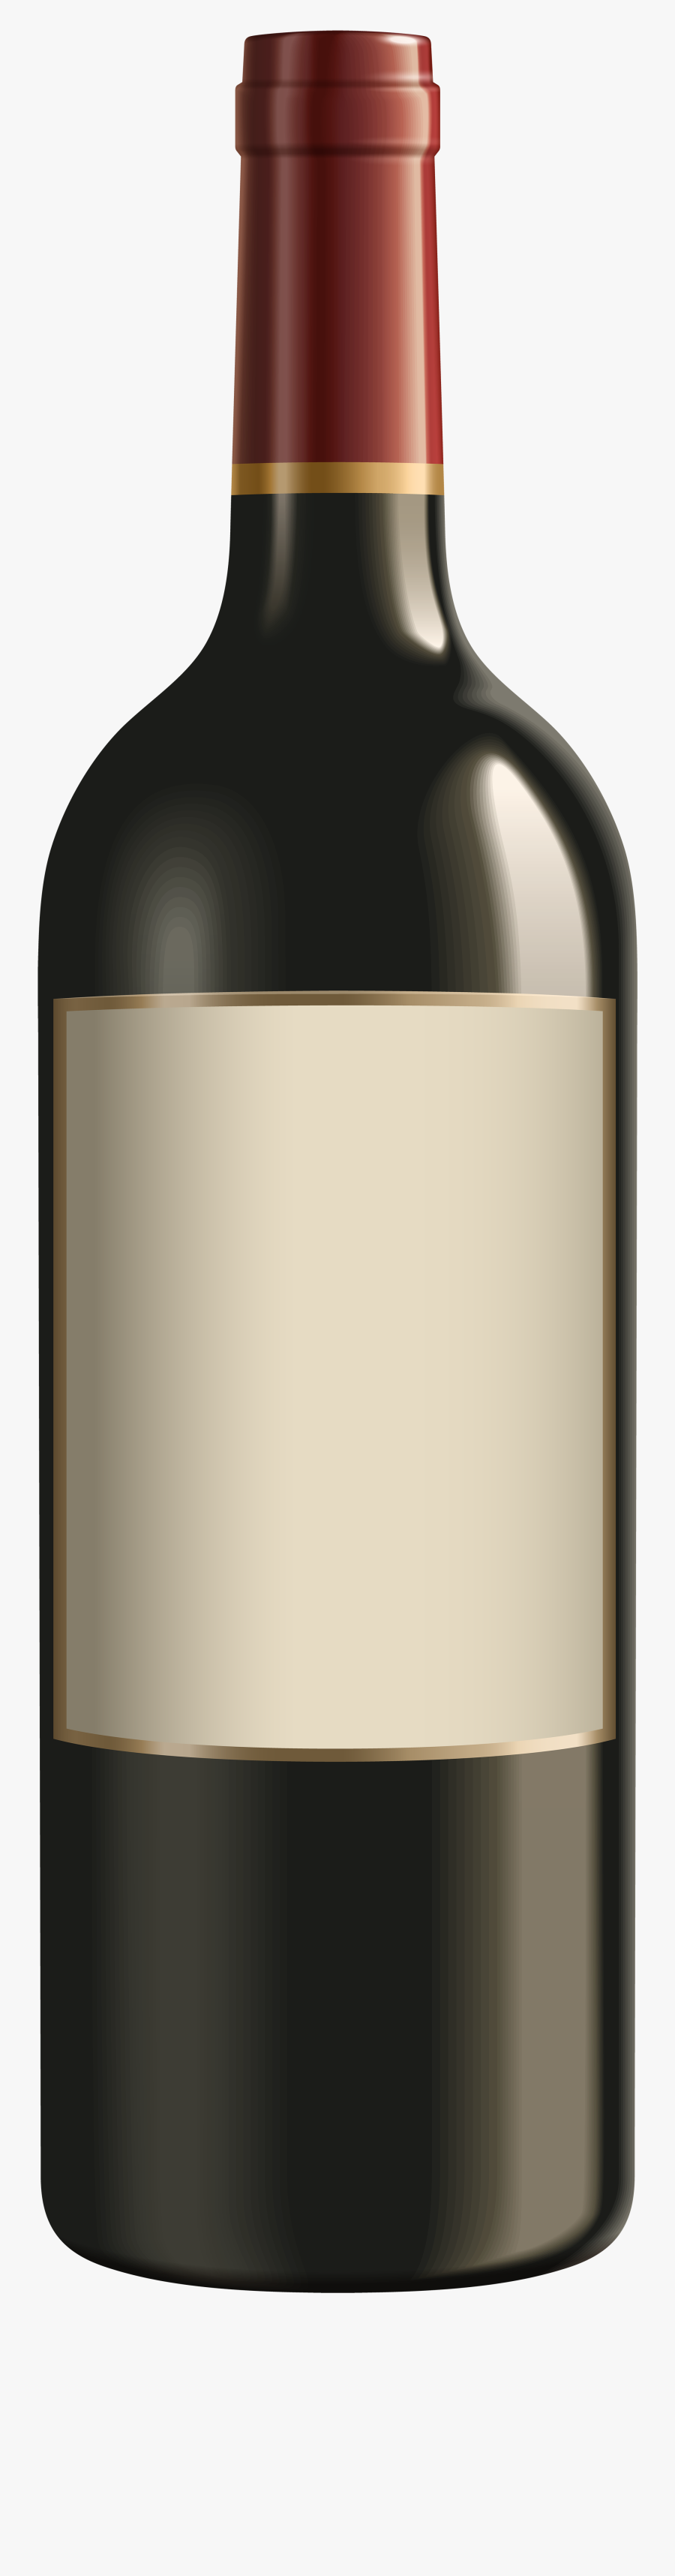 Bottle Of Red Wine Transparent Clip Art Image - Portable Network Graphics, Transparent Clipart